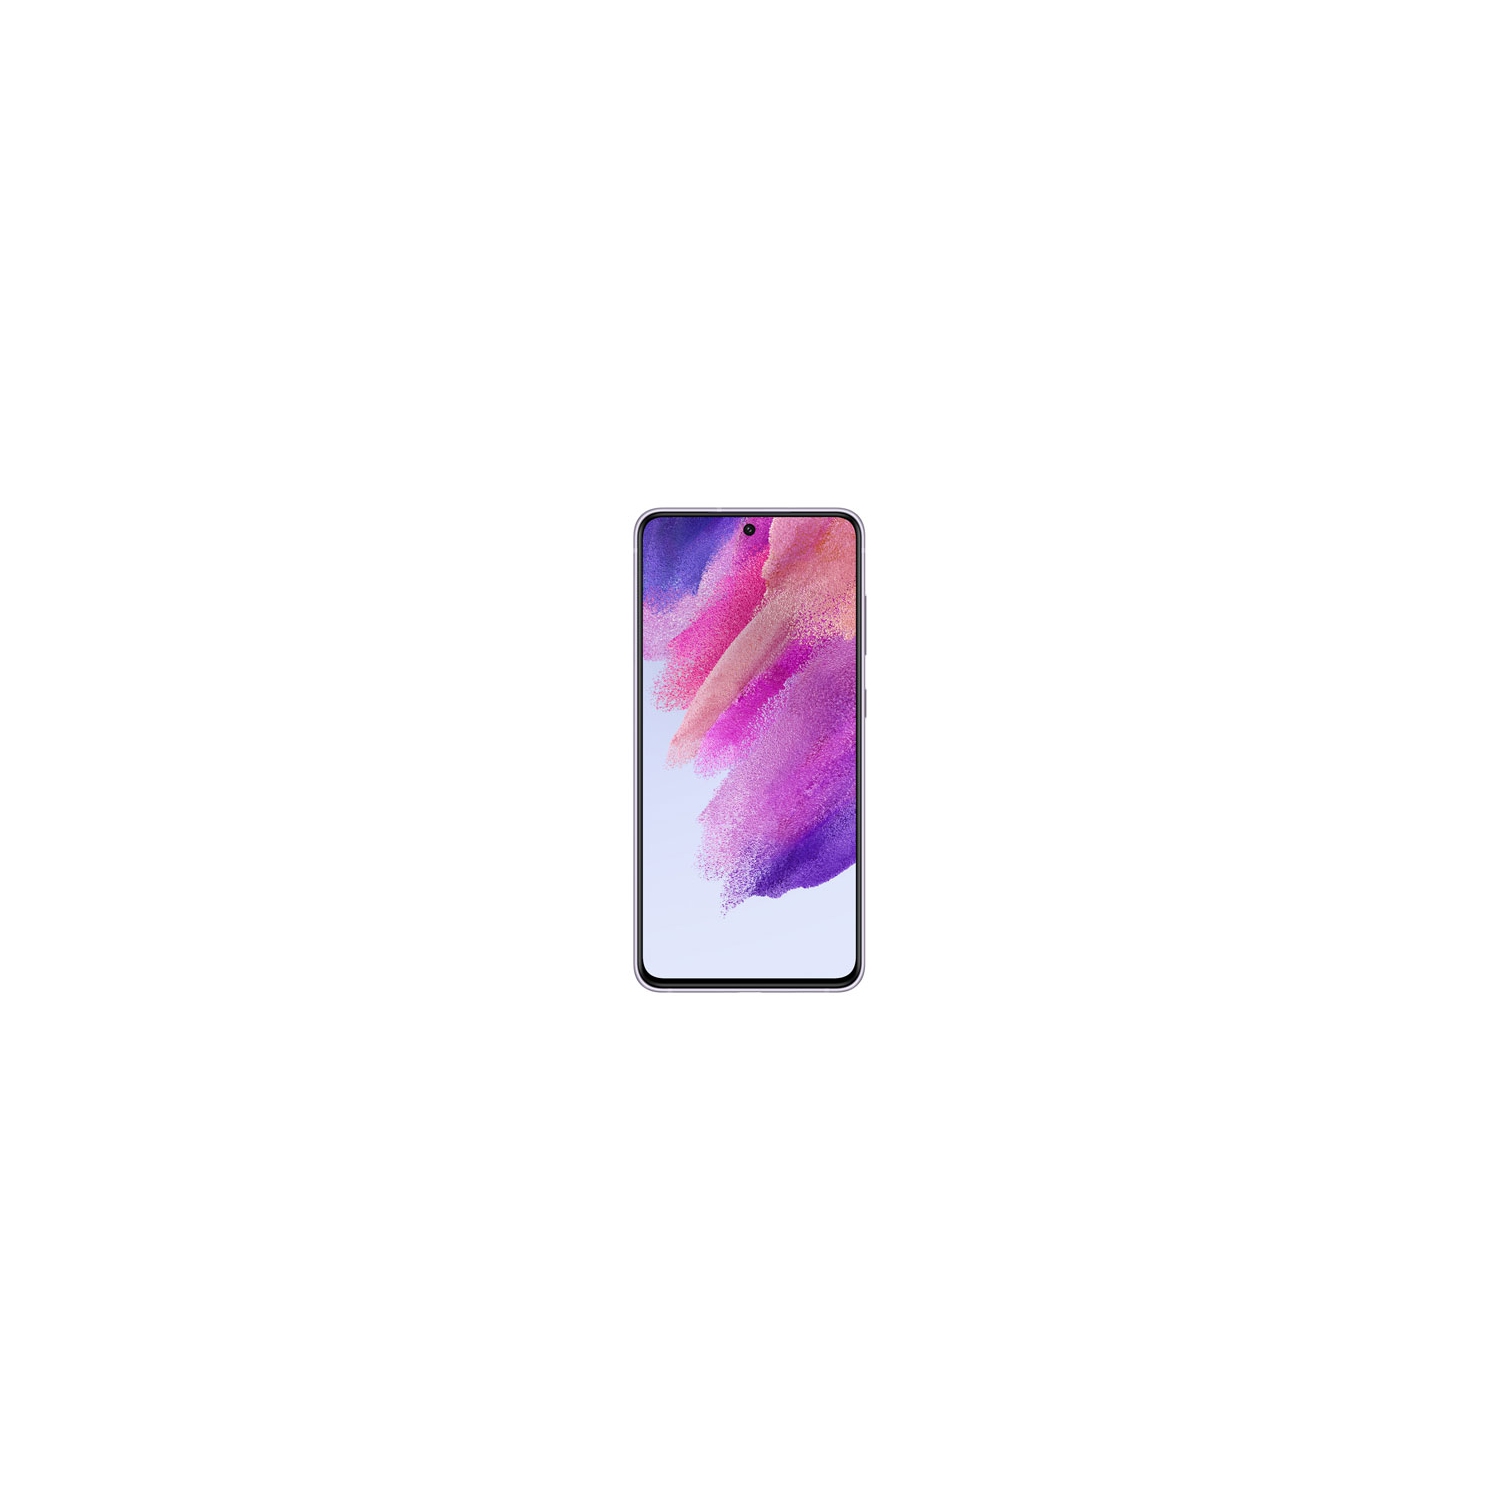 Samsung Galaxy S21 FE 5G 128GB - Lavender - Unlocked - Open Box